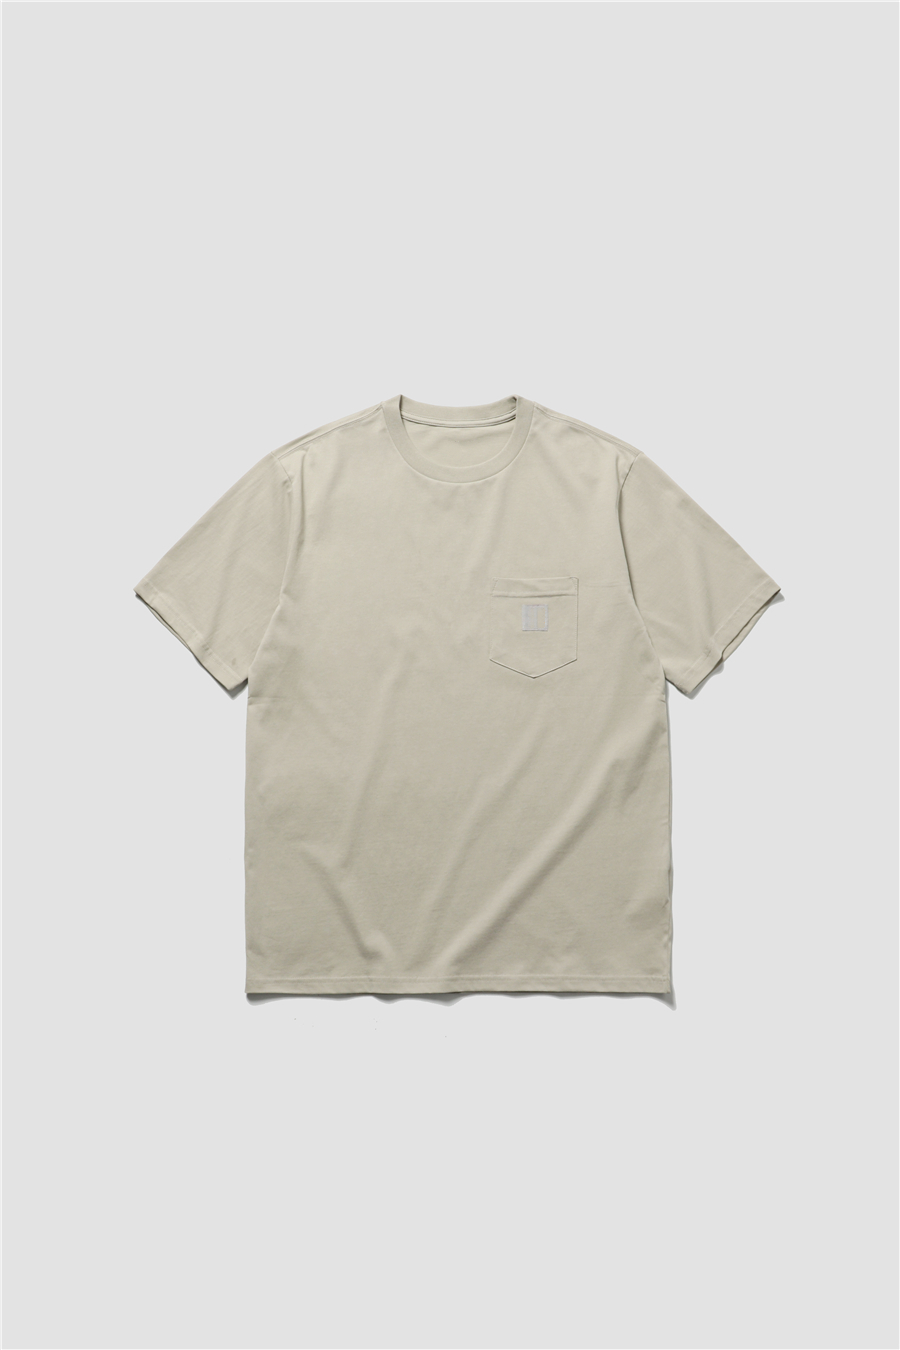 Cleanfit wip 24ss Pocket口袋款圆领T恤短袖Tee男女情侣款5色 - 图3